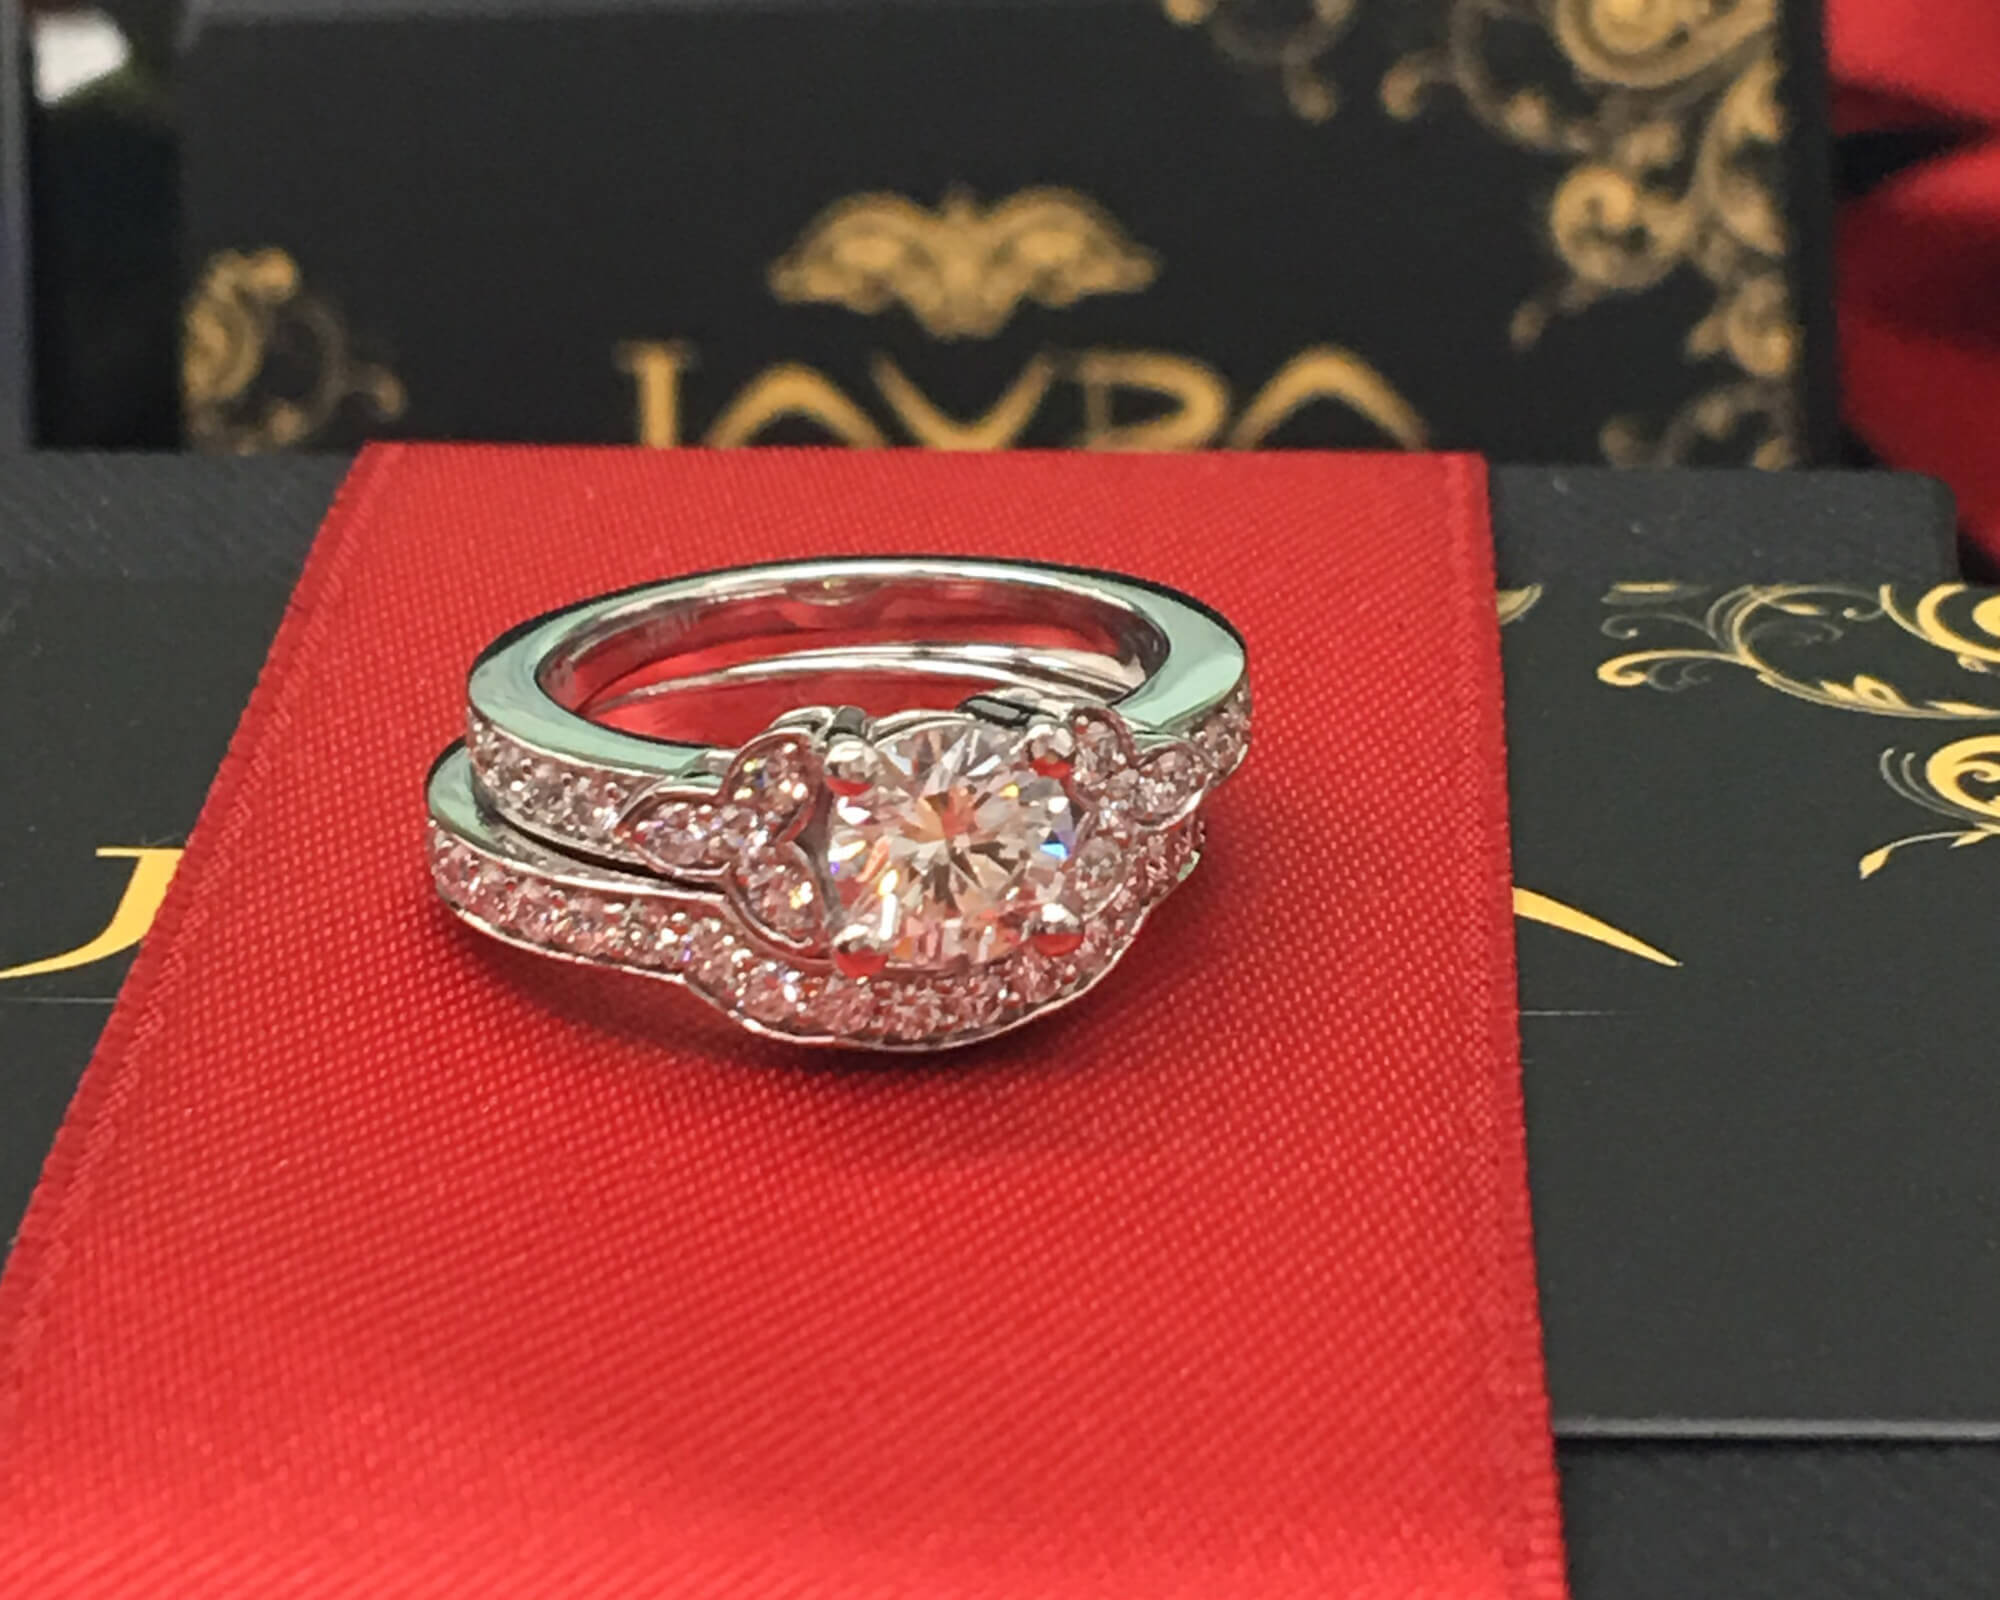 Ethical diamond engagement ring